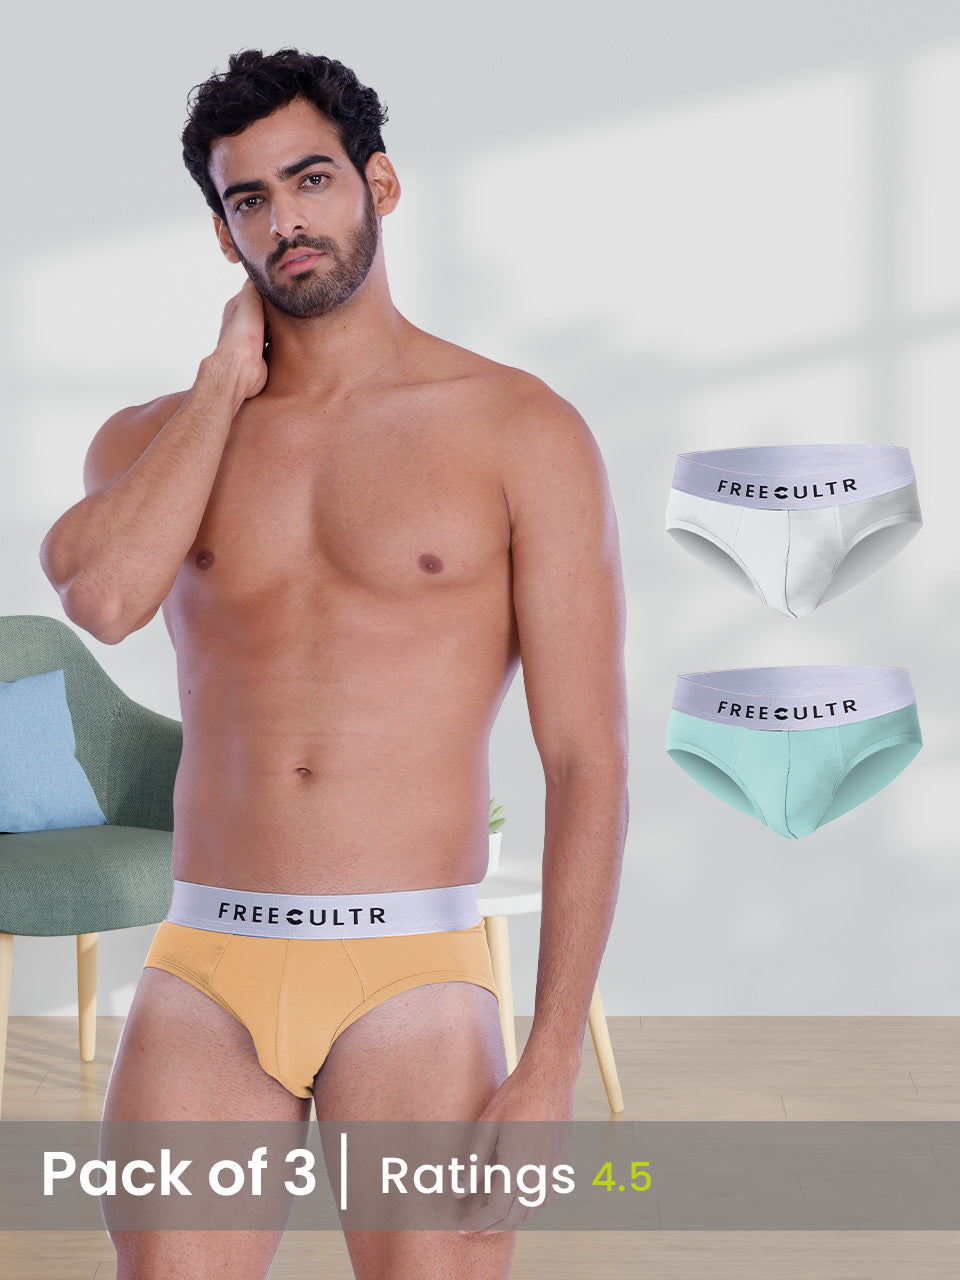  CLEVEDAUR Men's Underwear 3 Pack Lenzing MicroModal